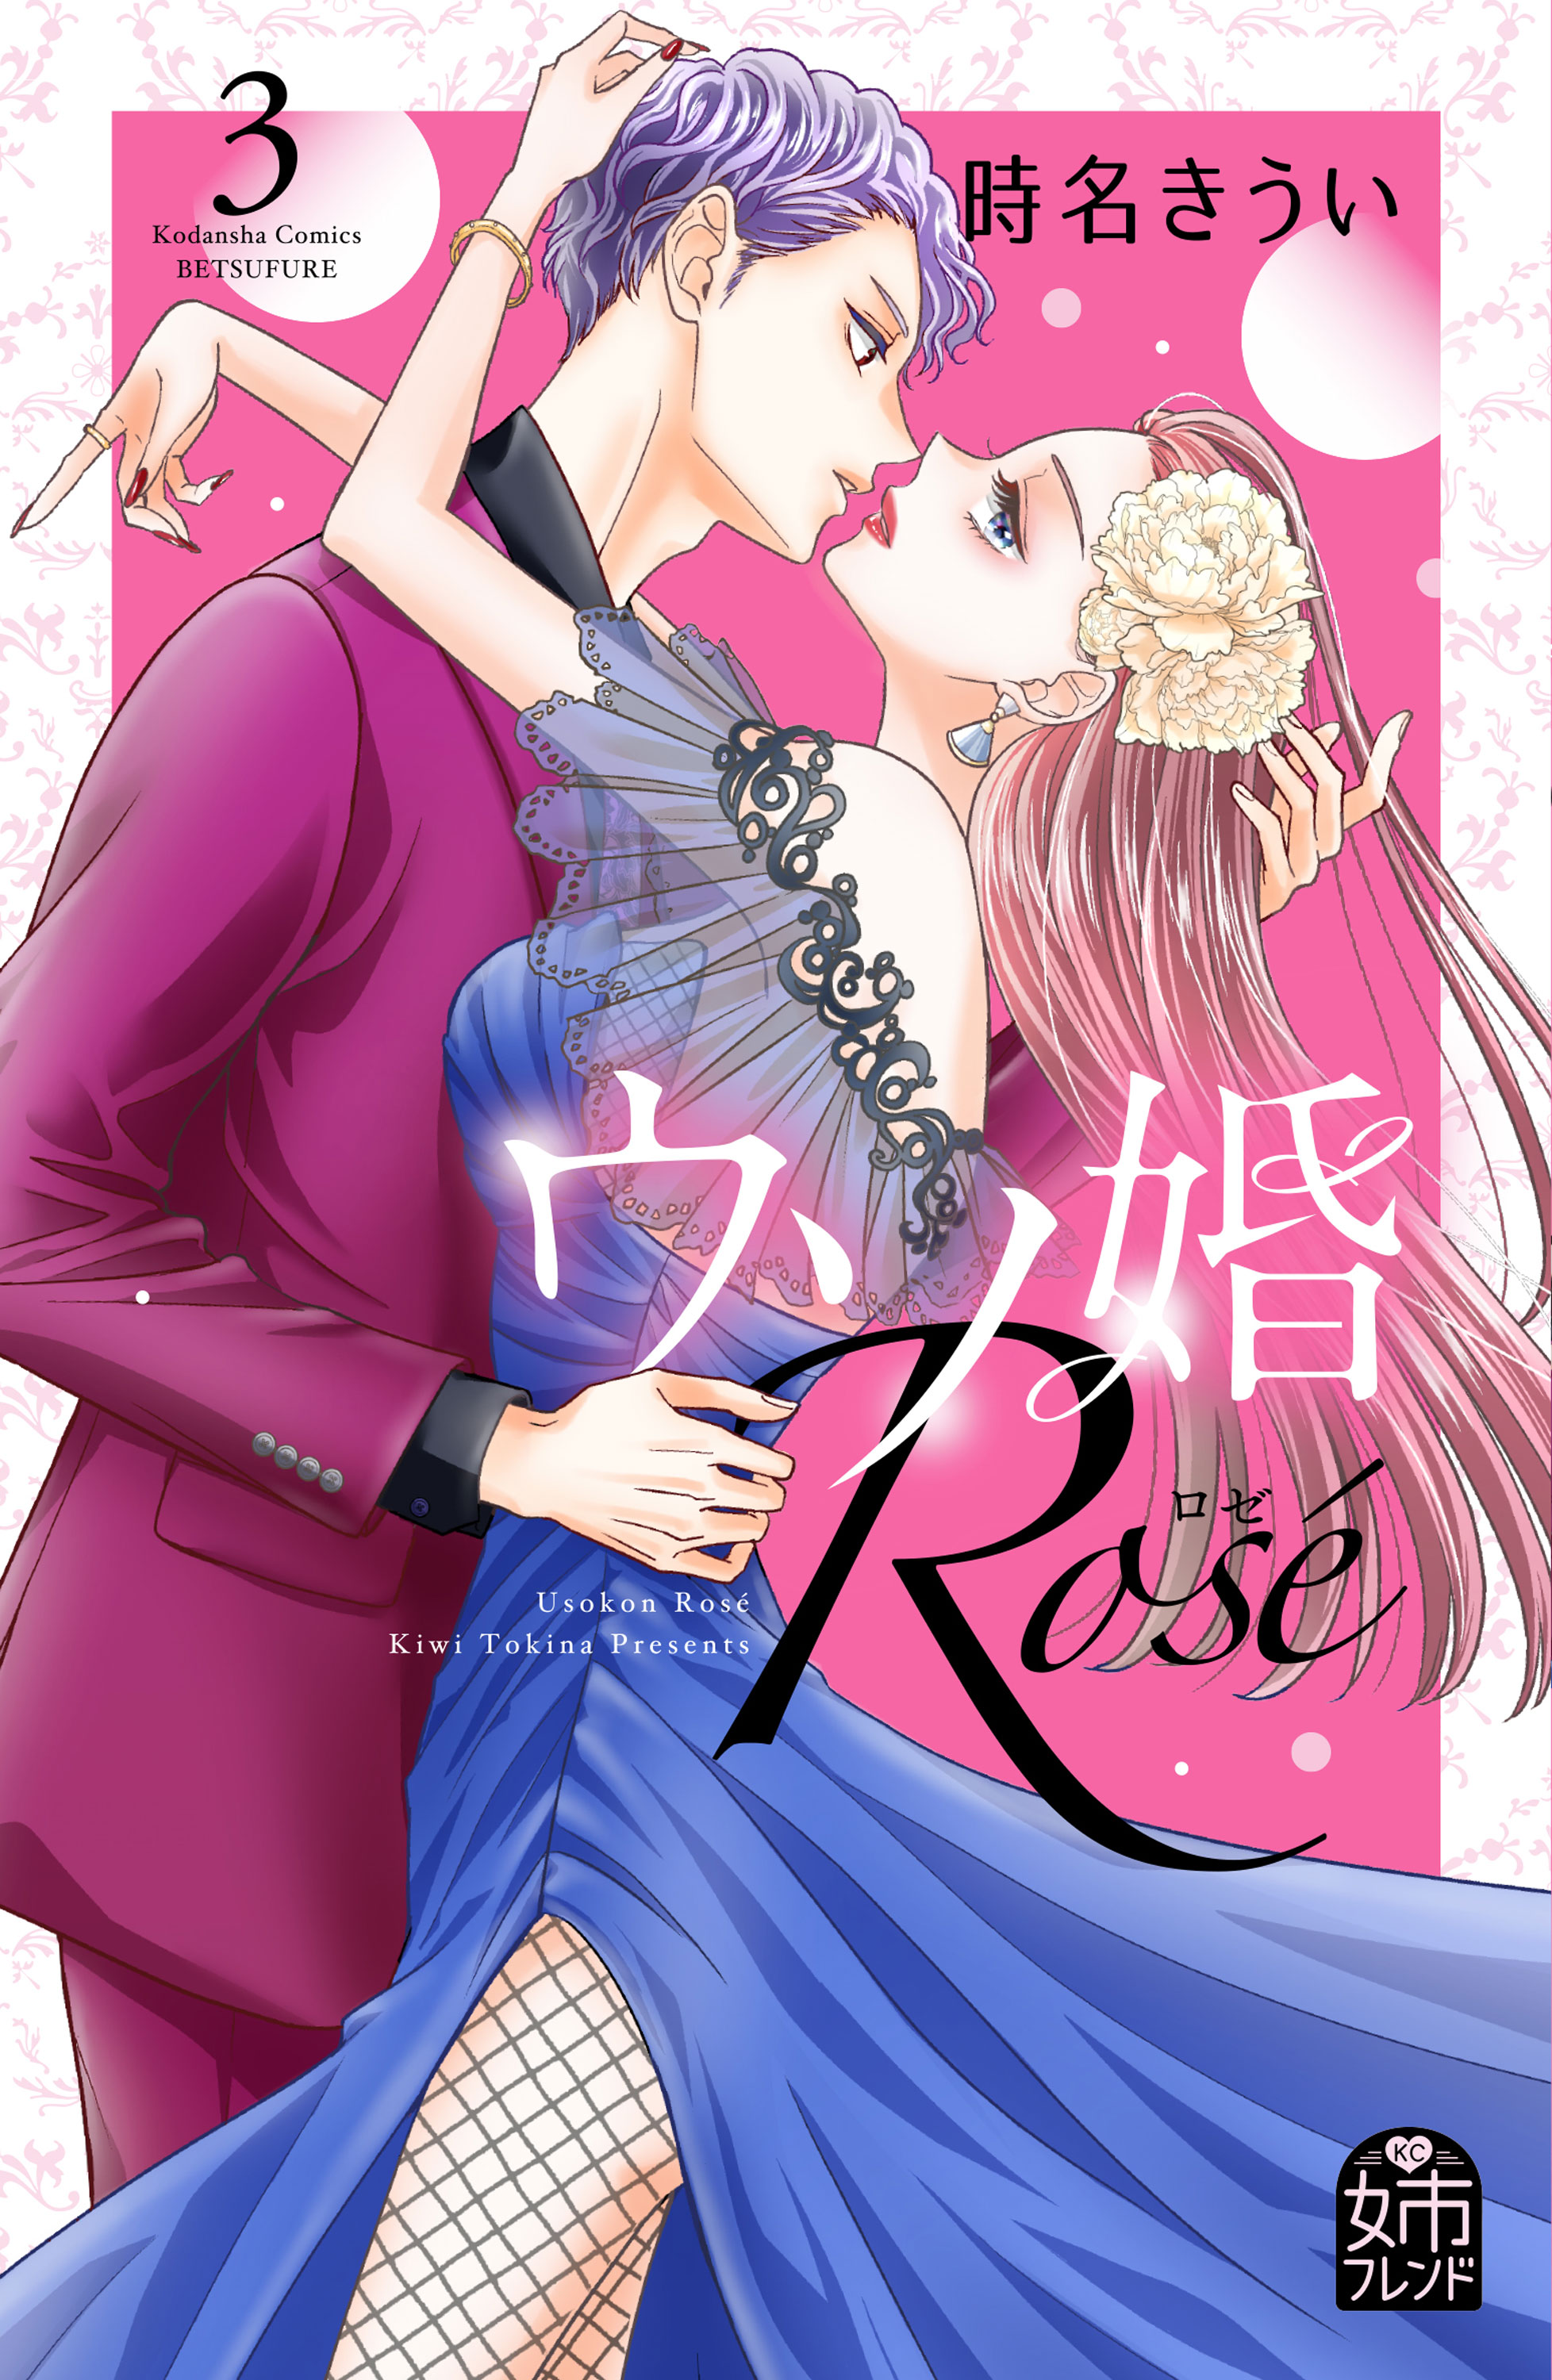 KC『ウソ婚』13巻&『ウソ婚 Rose』3巻☆2冊同時発売記念RTキャンペーン 